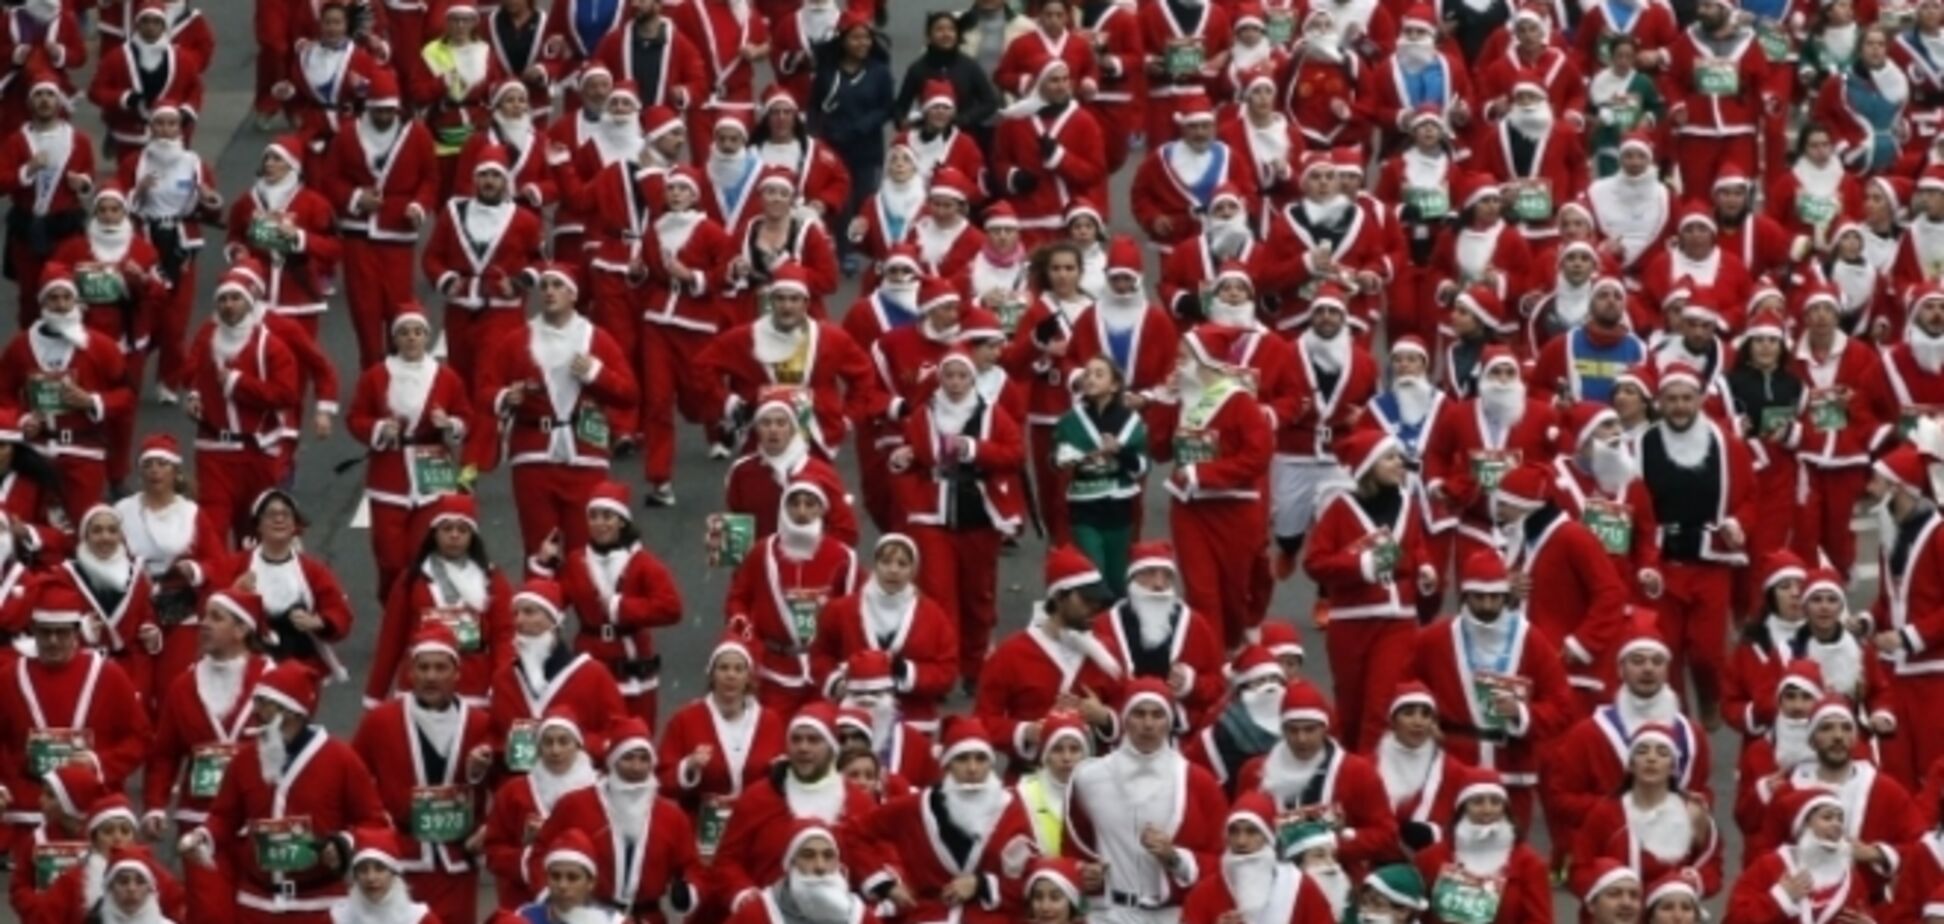 Мадрид заполонили тысячи бегающих Санта-Клаусов: фото и видео забега